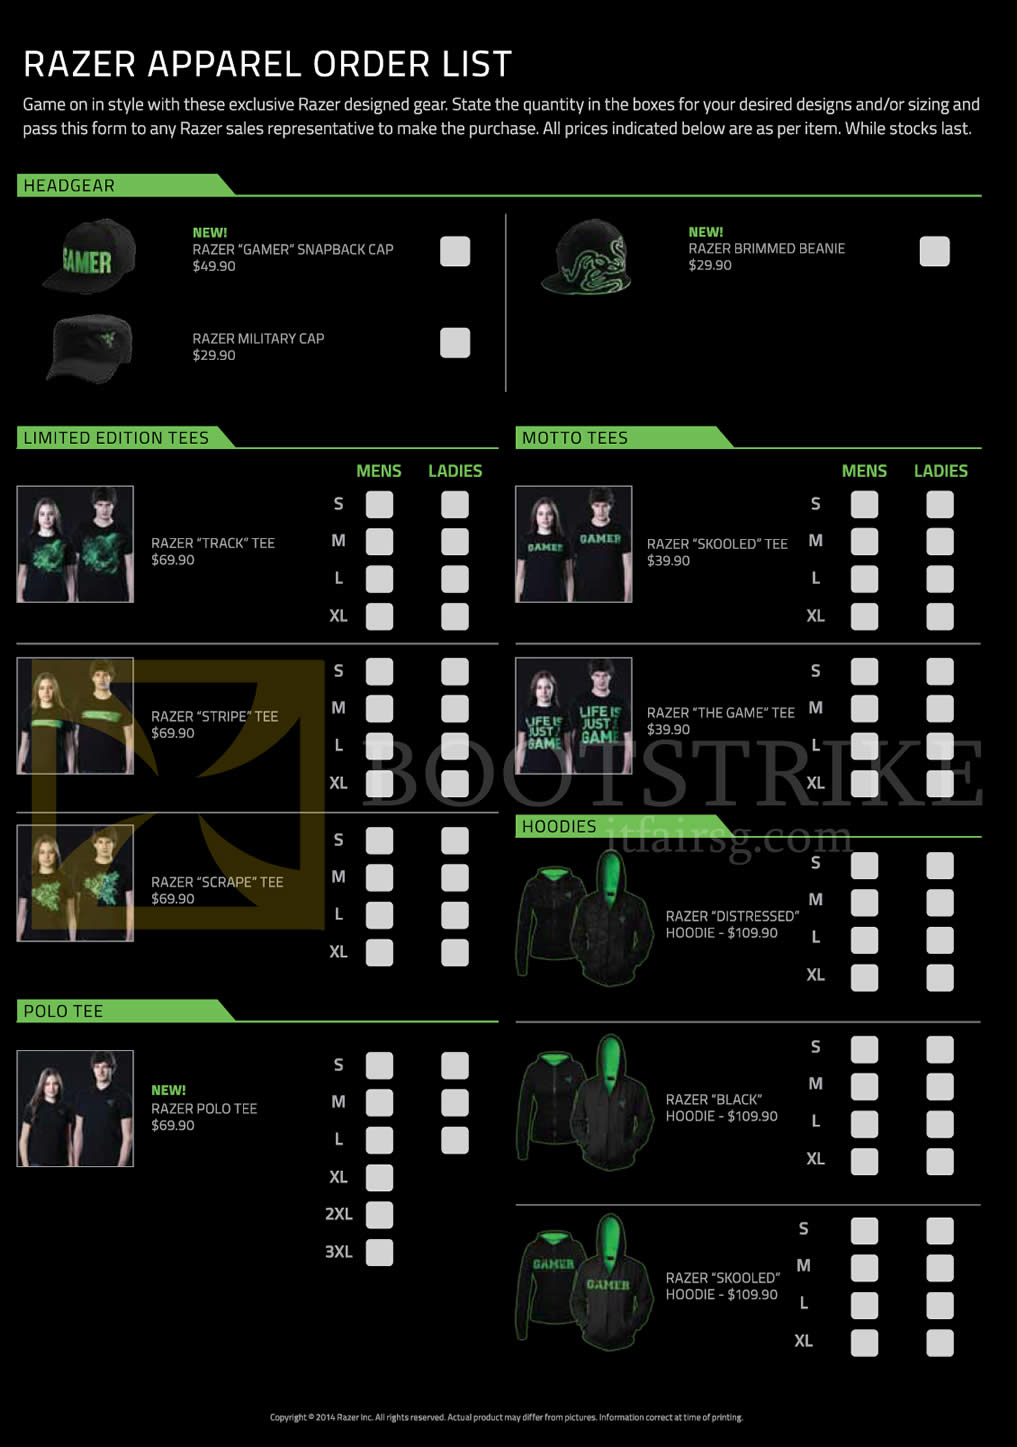 IT SHOW 2014 price list image brochure of Ban Leong Razer Apparel Order List Headgear, Motto Tees, Hoodies, Polo Tee